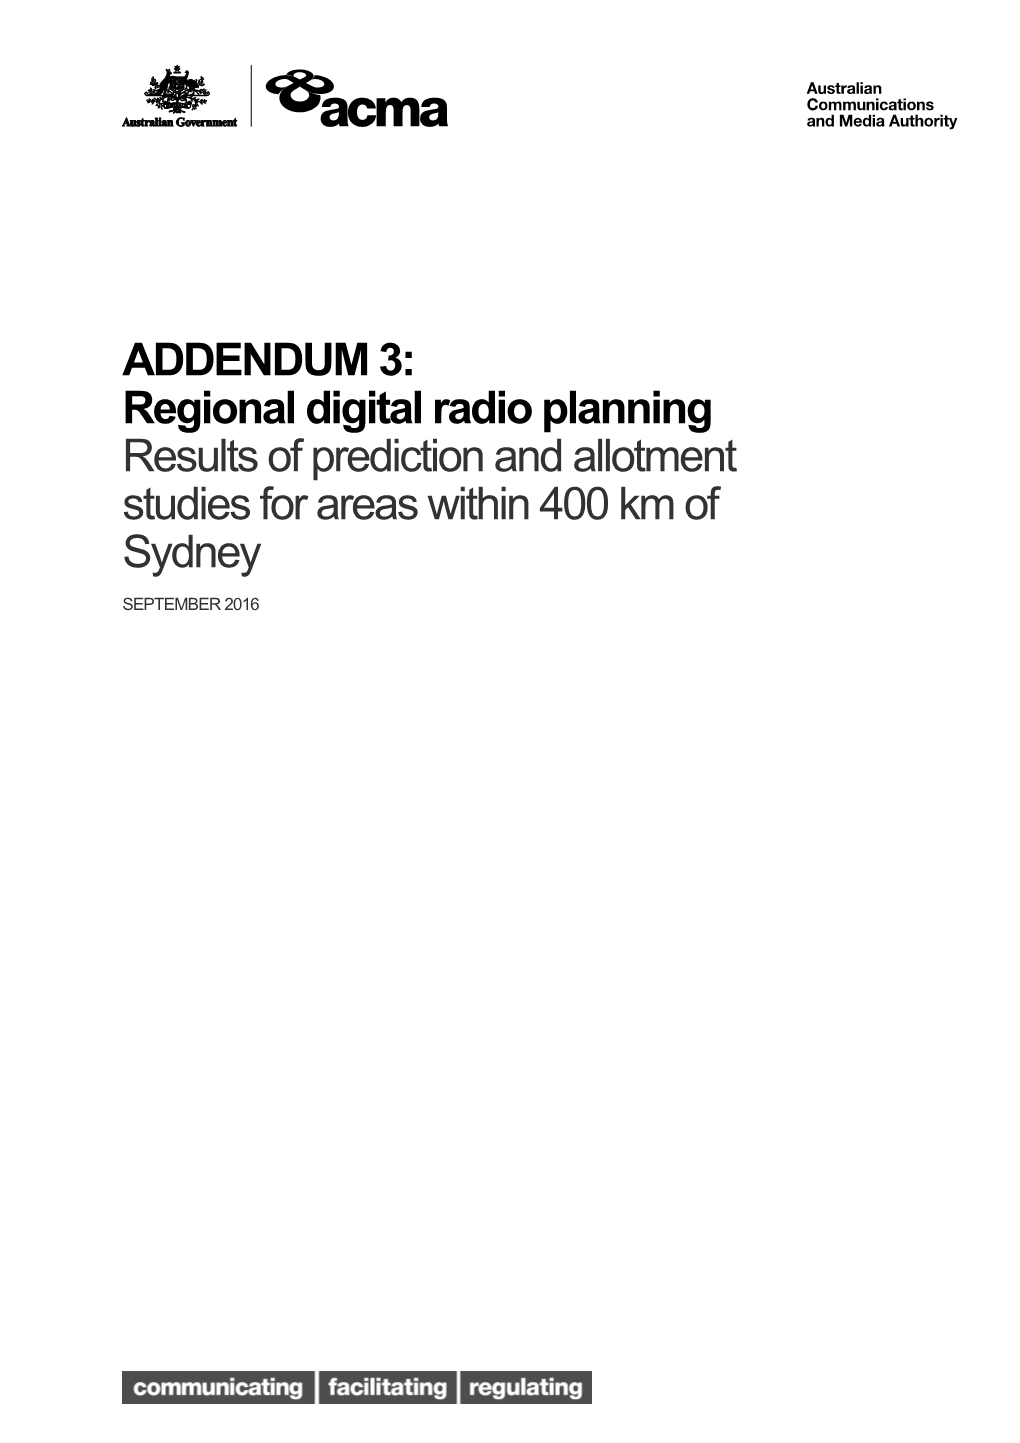 Regional Digital Radio Planning